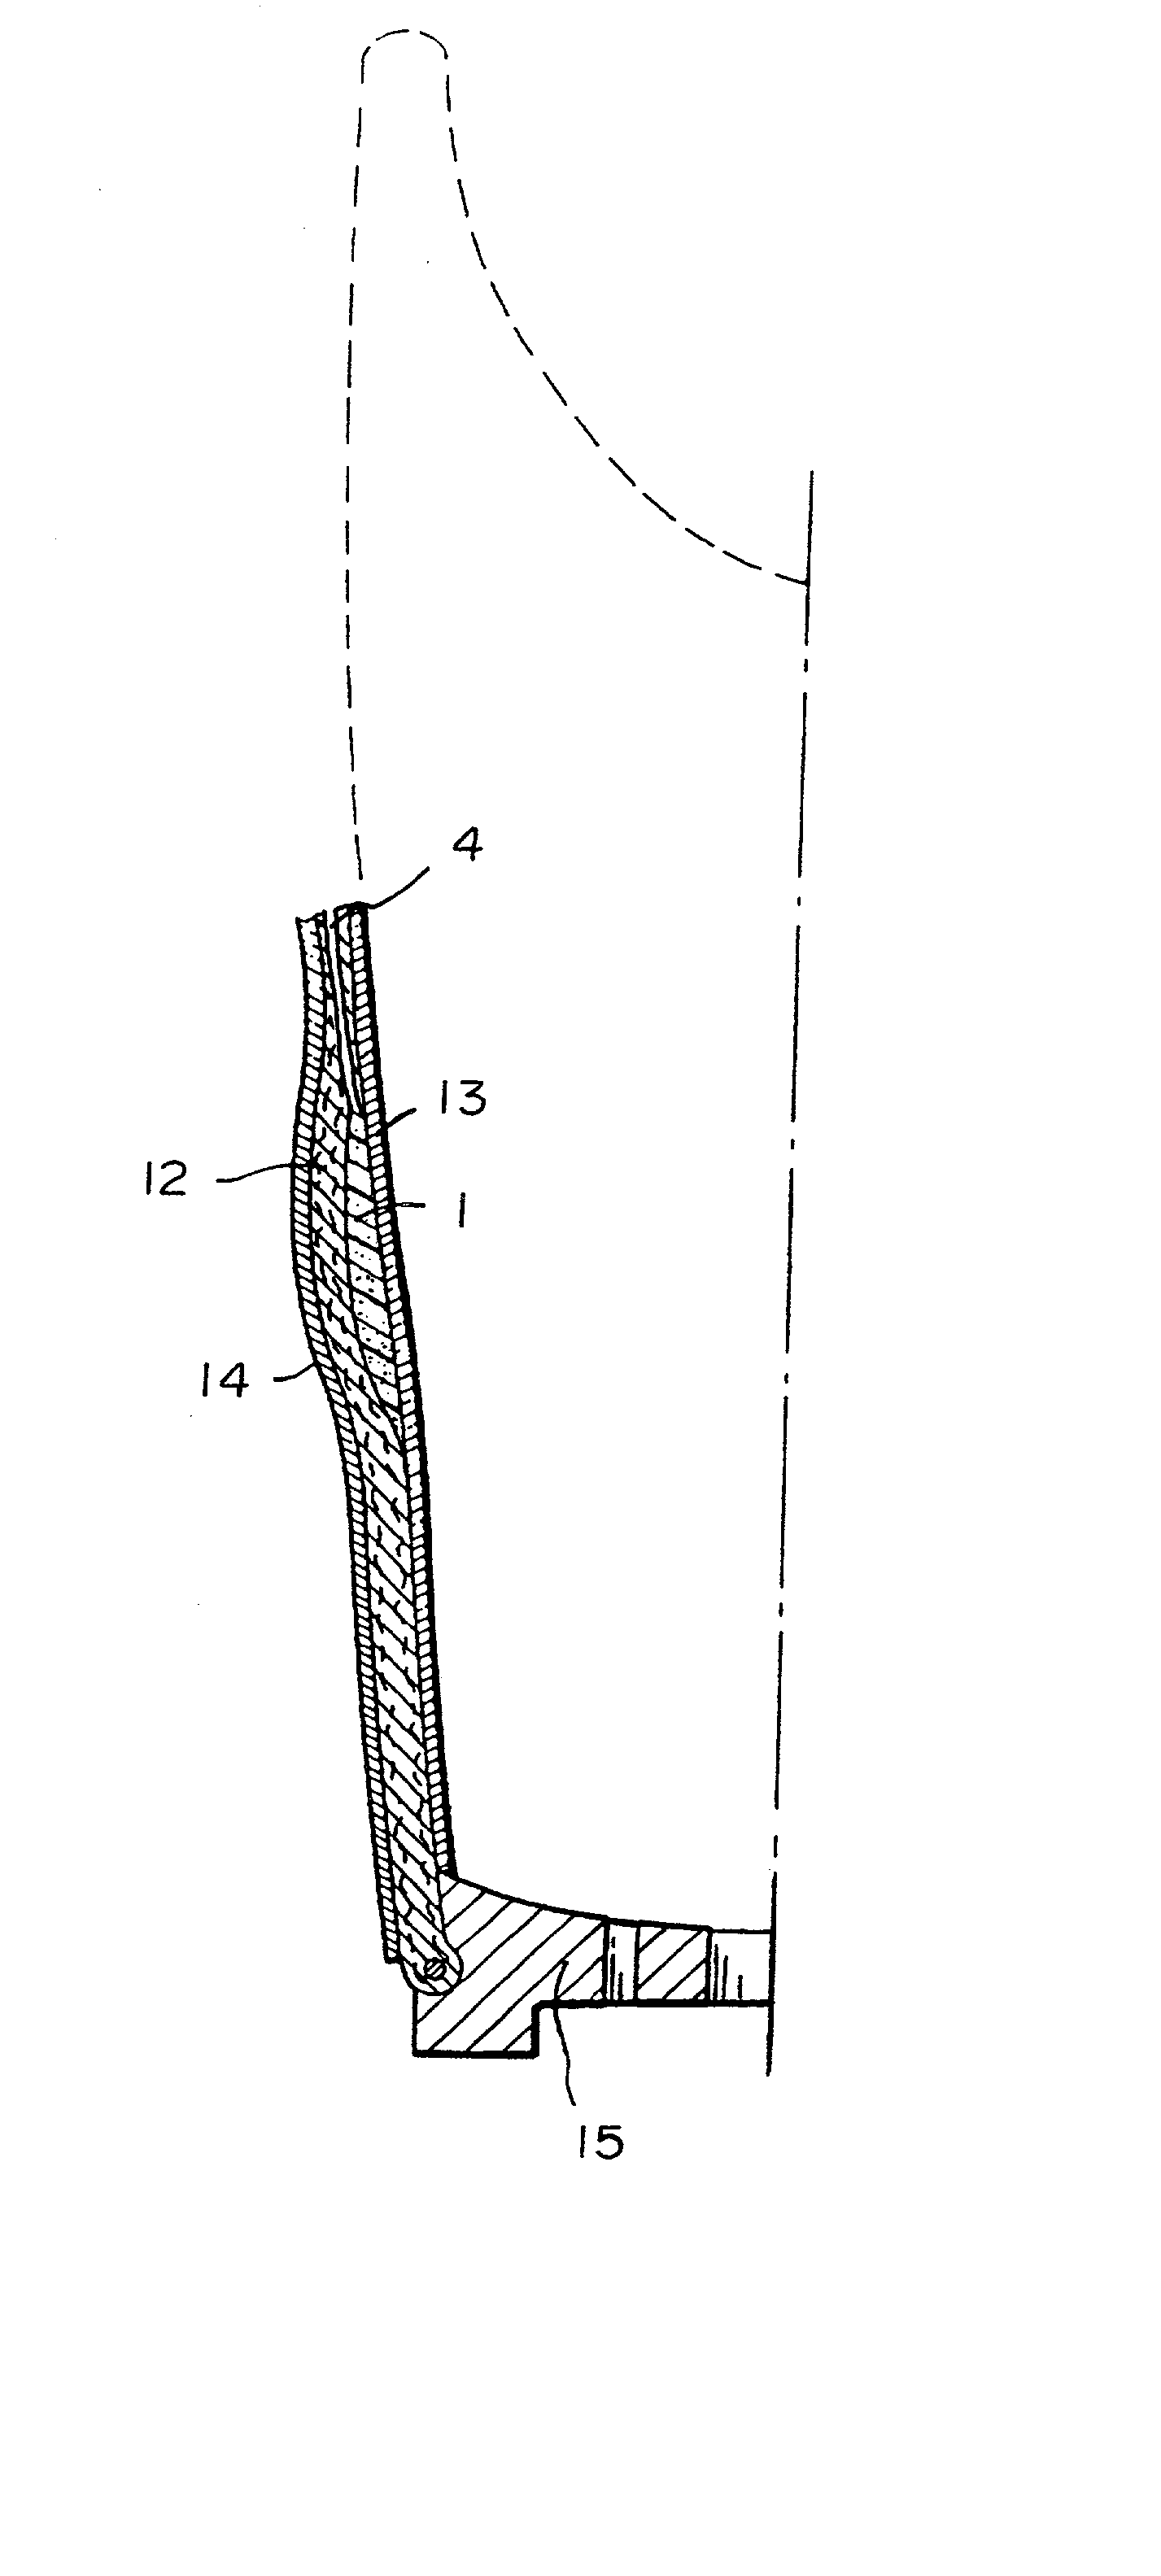 Artificial limb socket containing volume control pad